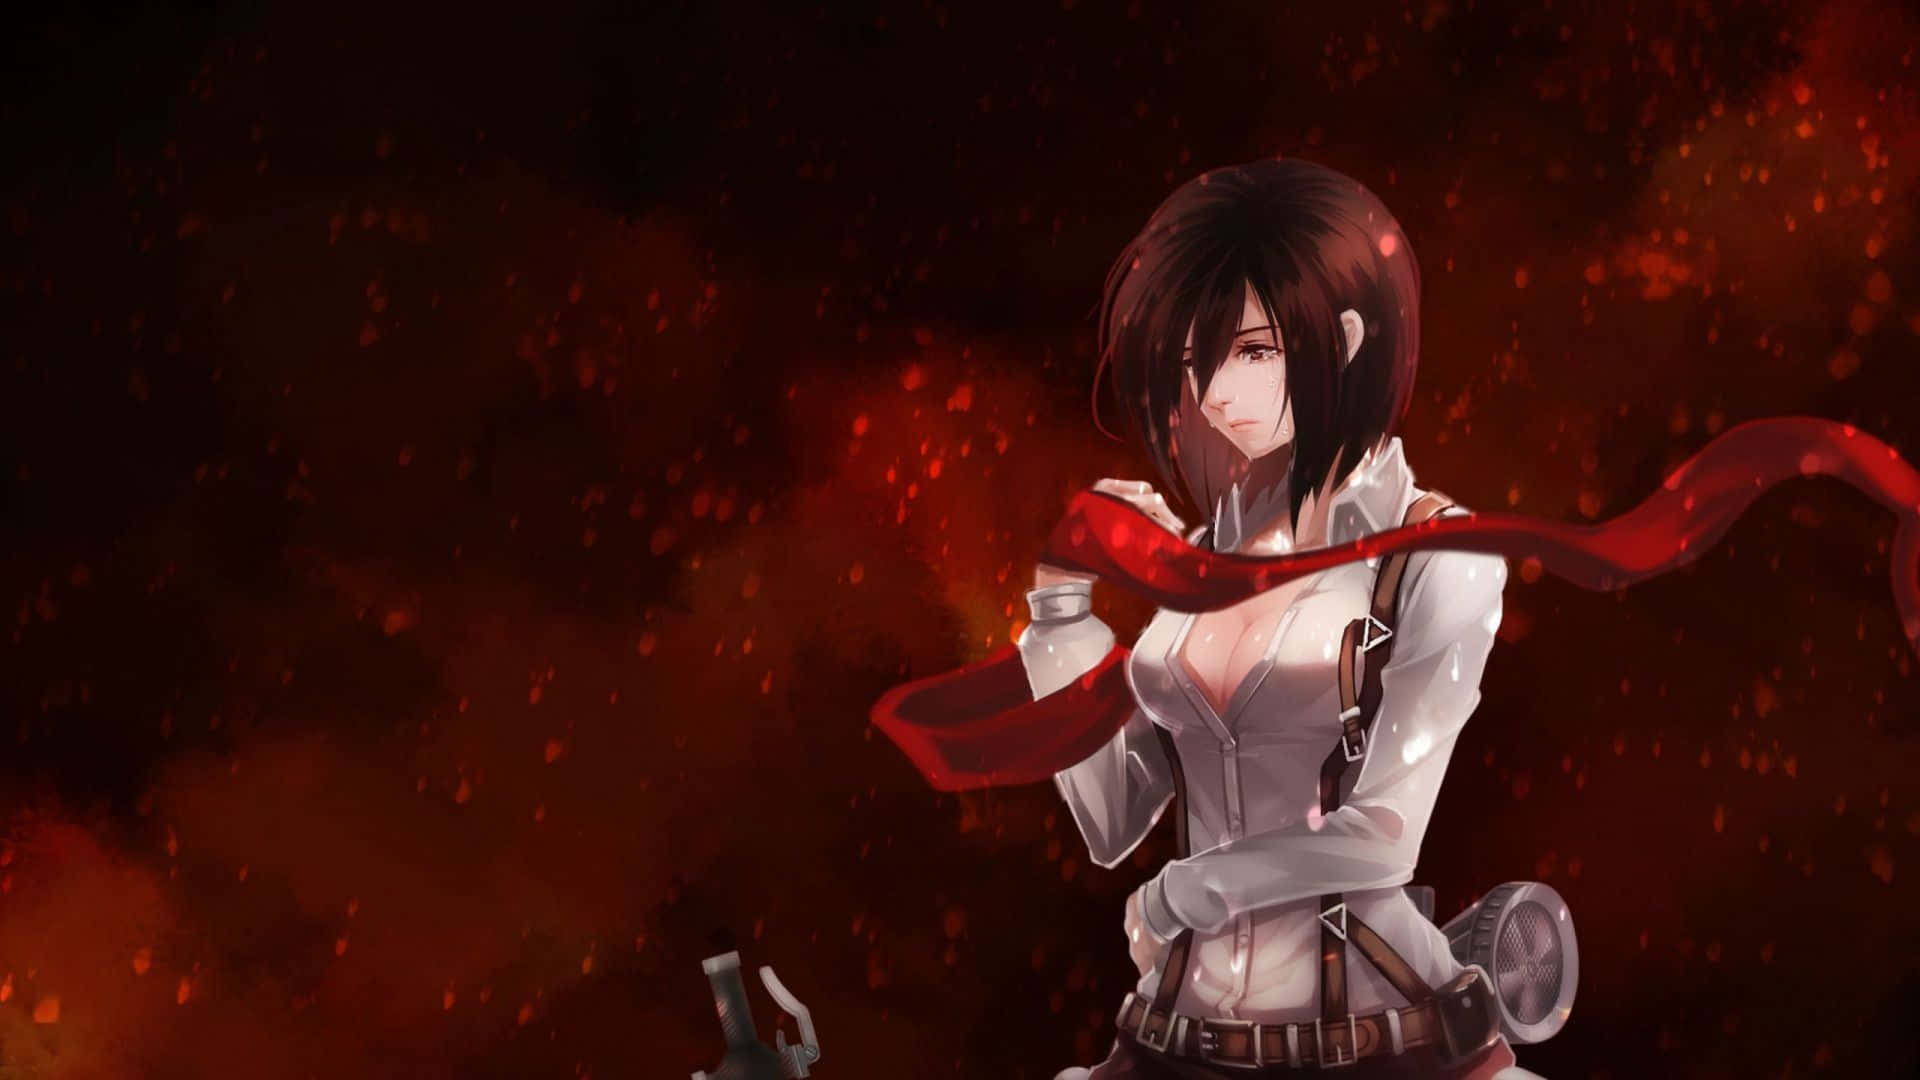 Mikasaackerman Llorando Sosteniendo Una Cinta Roja. Fondo de pantalla